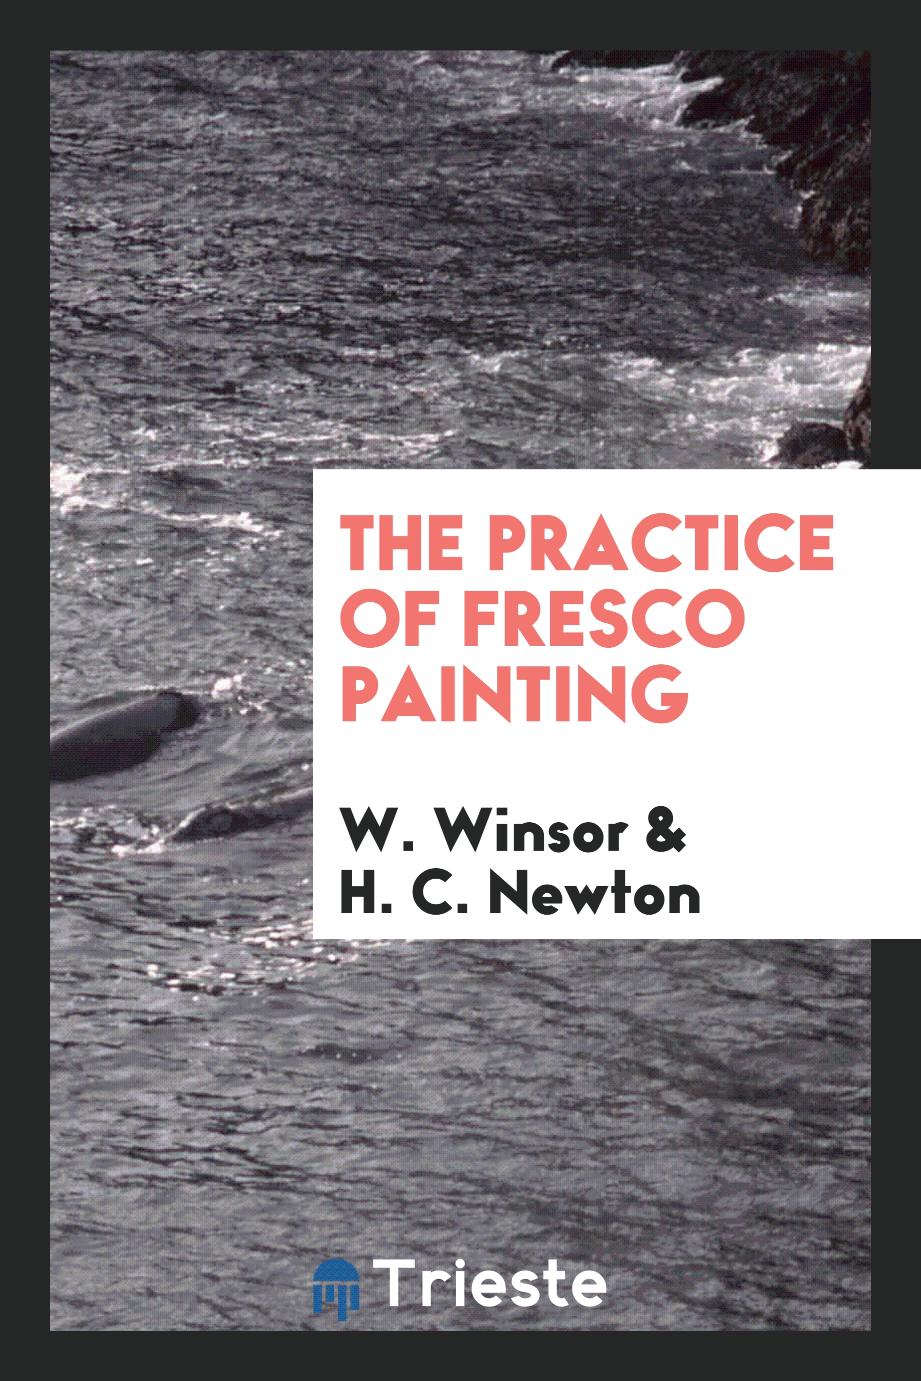 W. Winsor, H. C. Newton - The practice of fresco painting